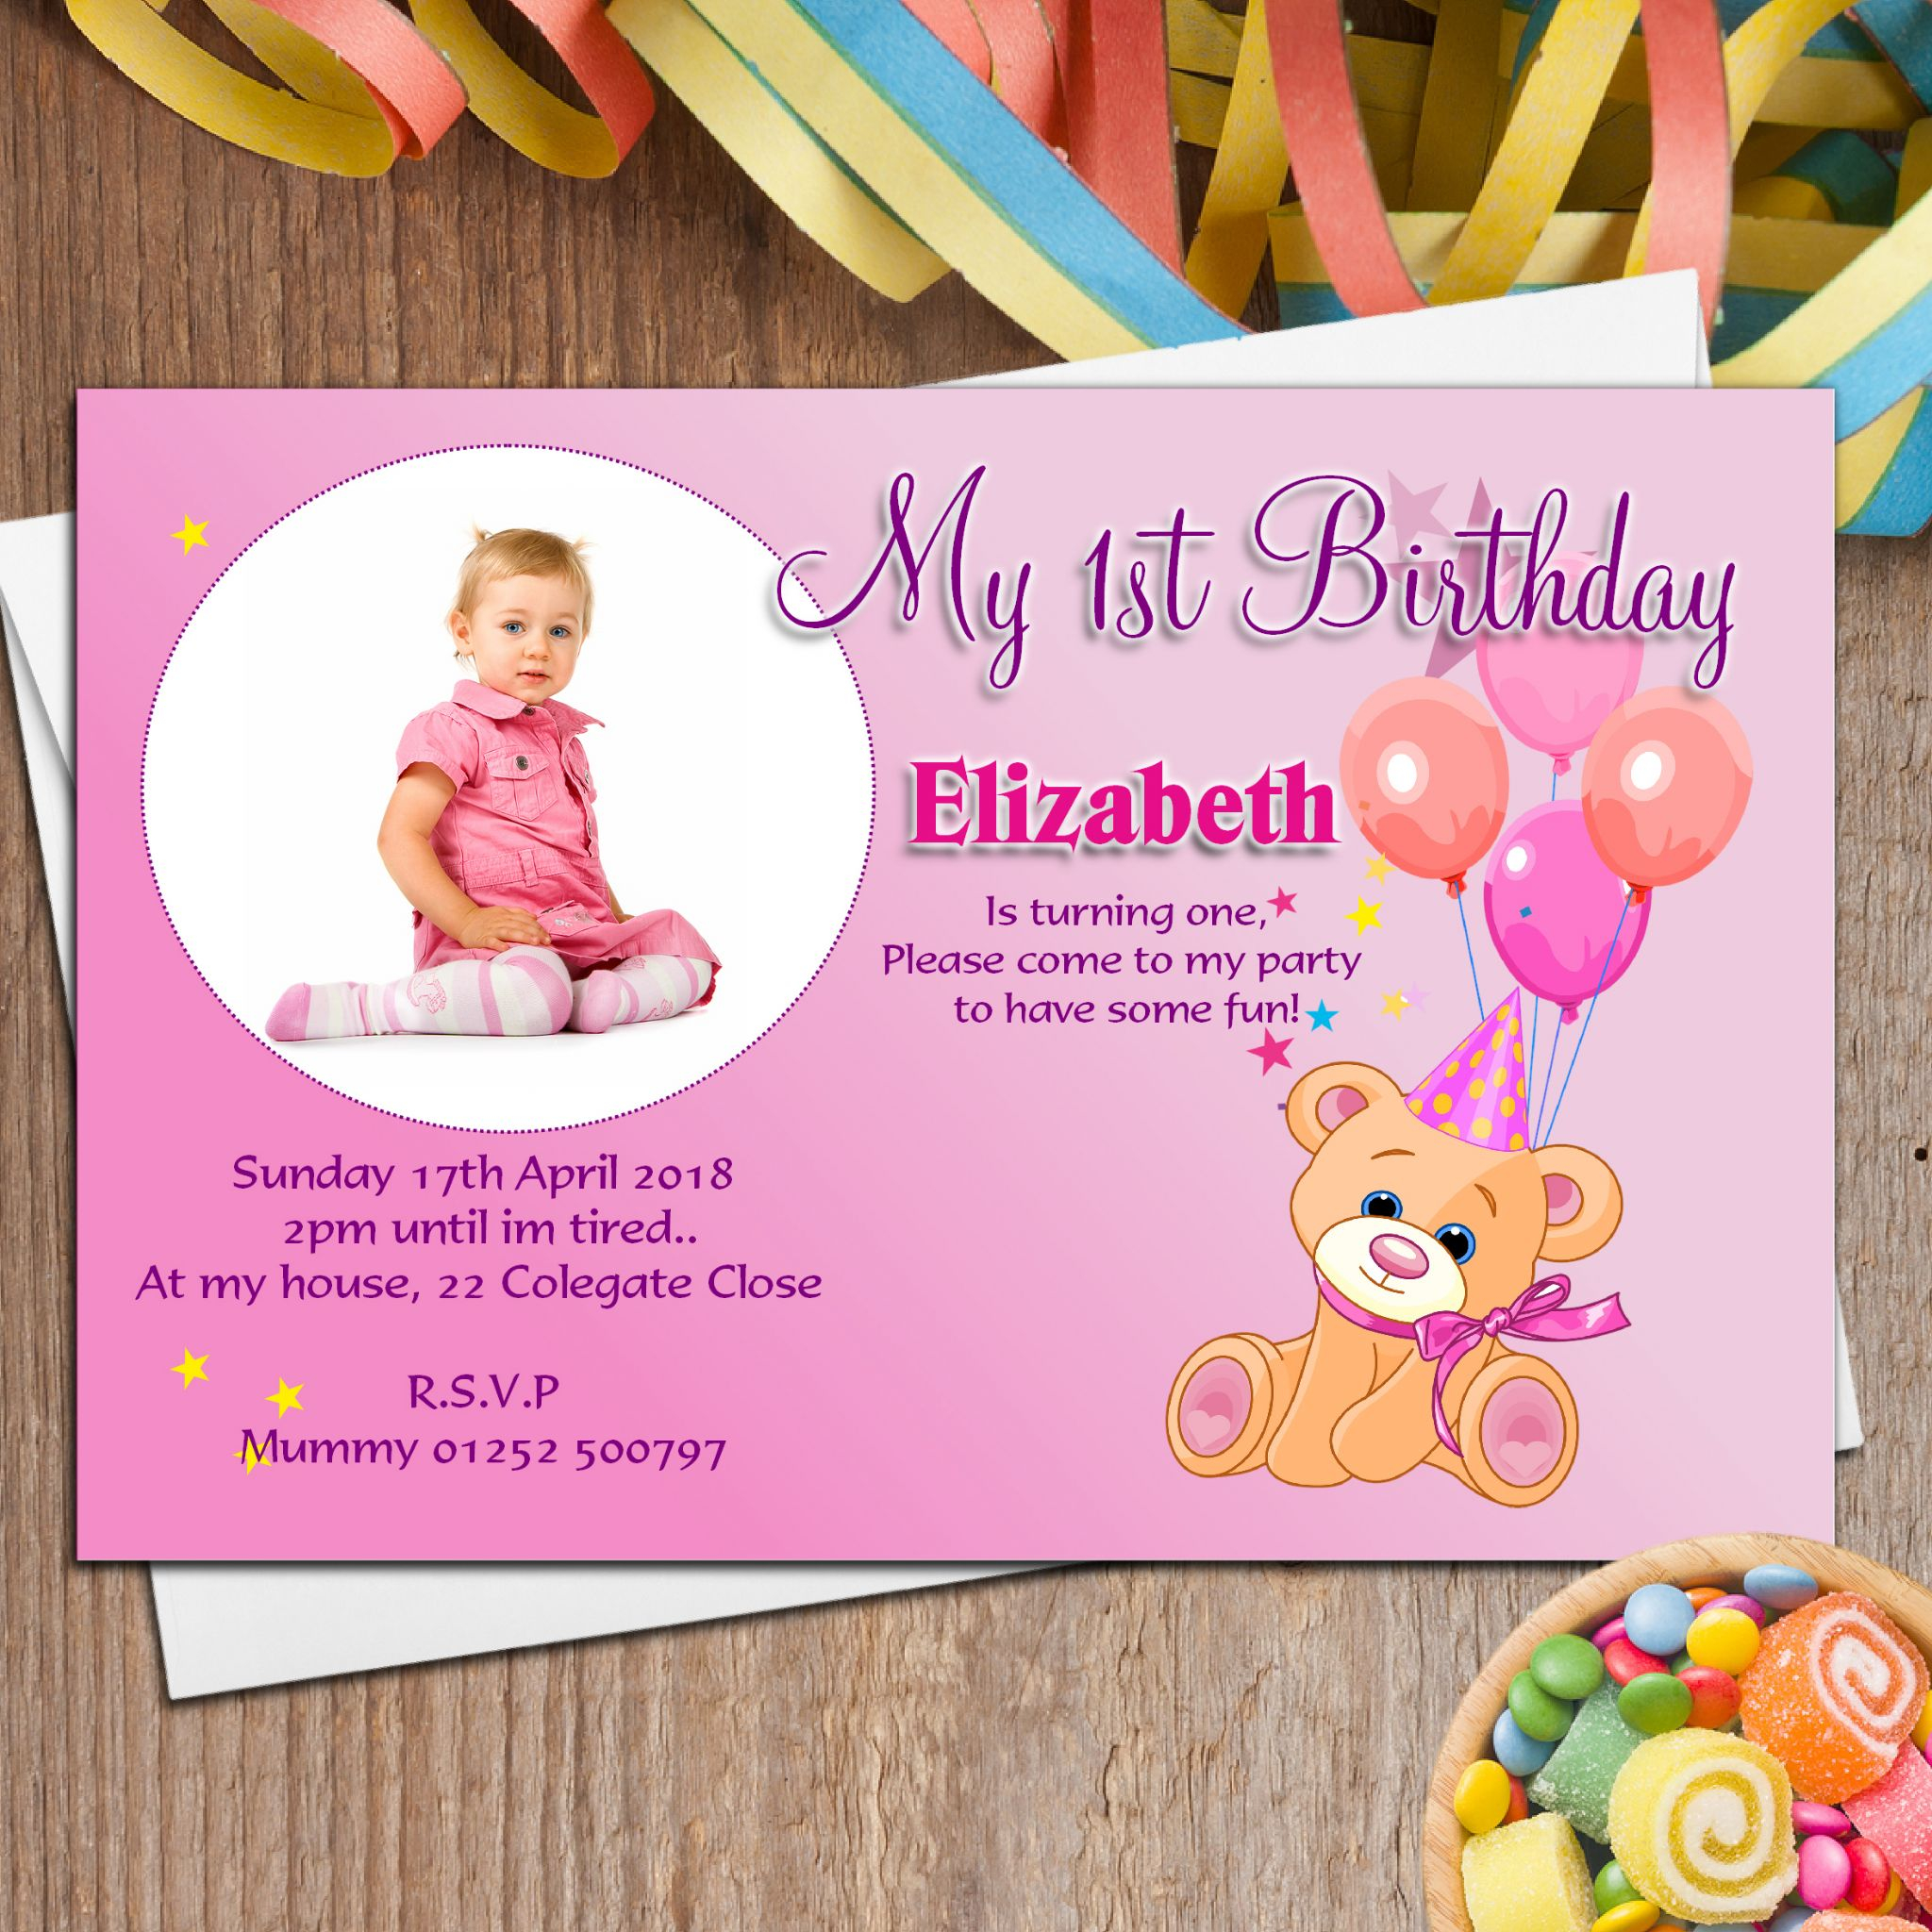 Birthday Card Invitations Ideas 97 Create Birthday Invitation Card Online For Free Free